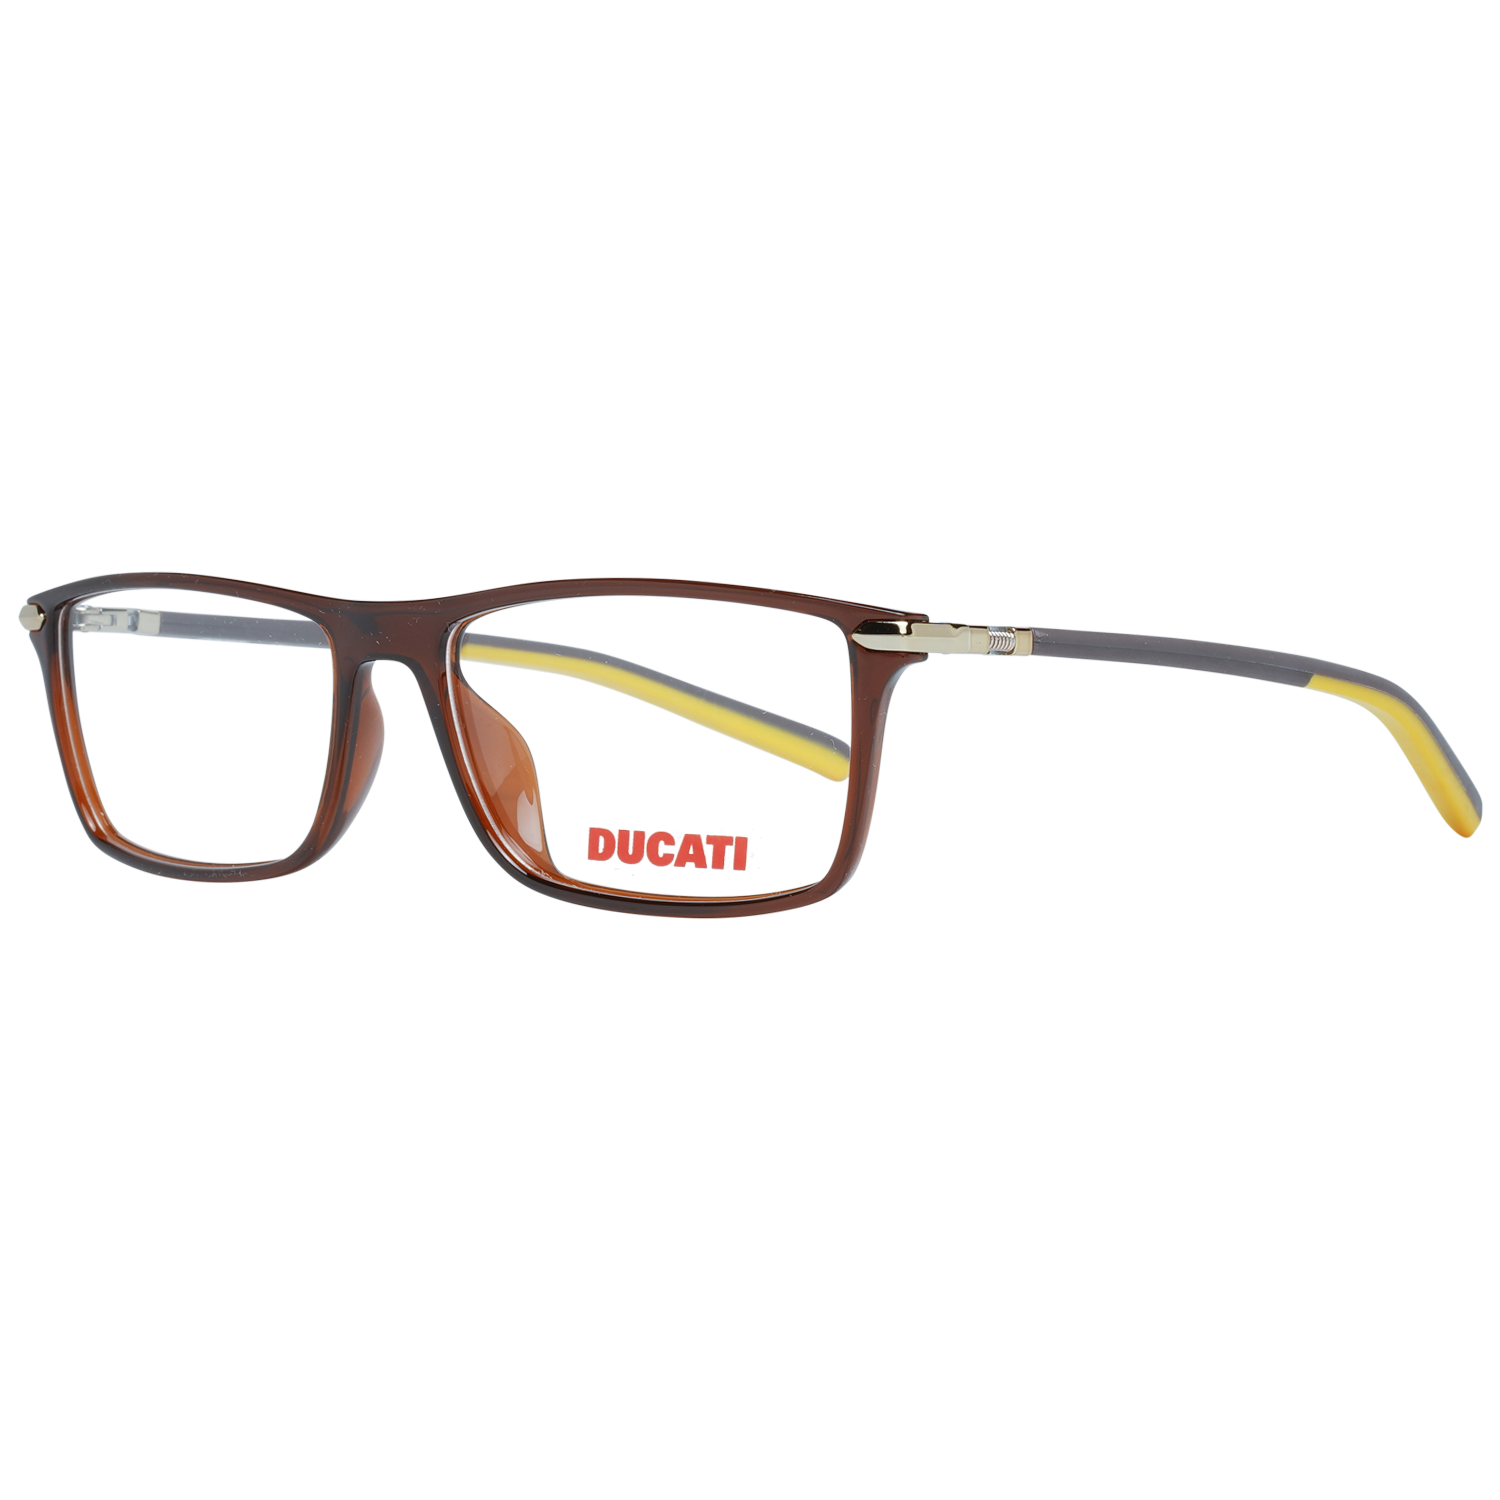 Ducati Frames Ducati Eyeglasses Optical Frame DA1001 100 56 Eyeglasses Eyewear UK USA Australia 